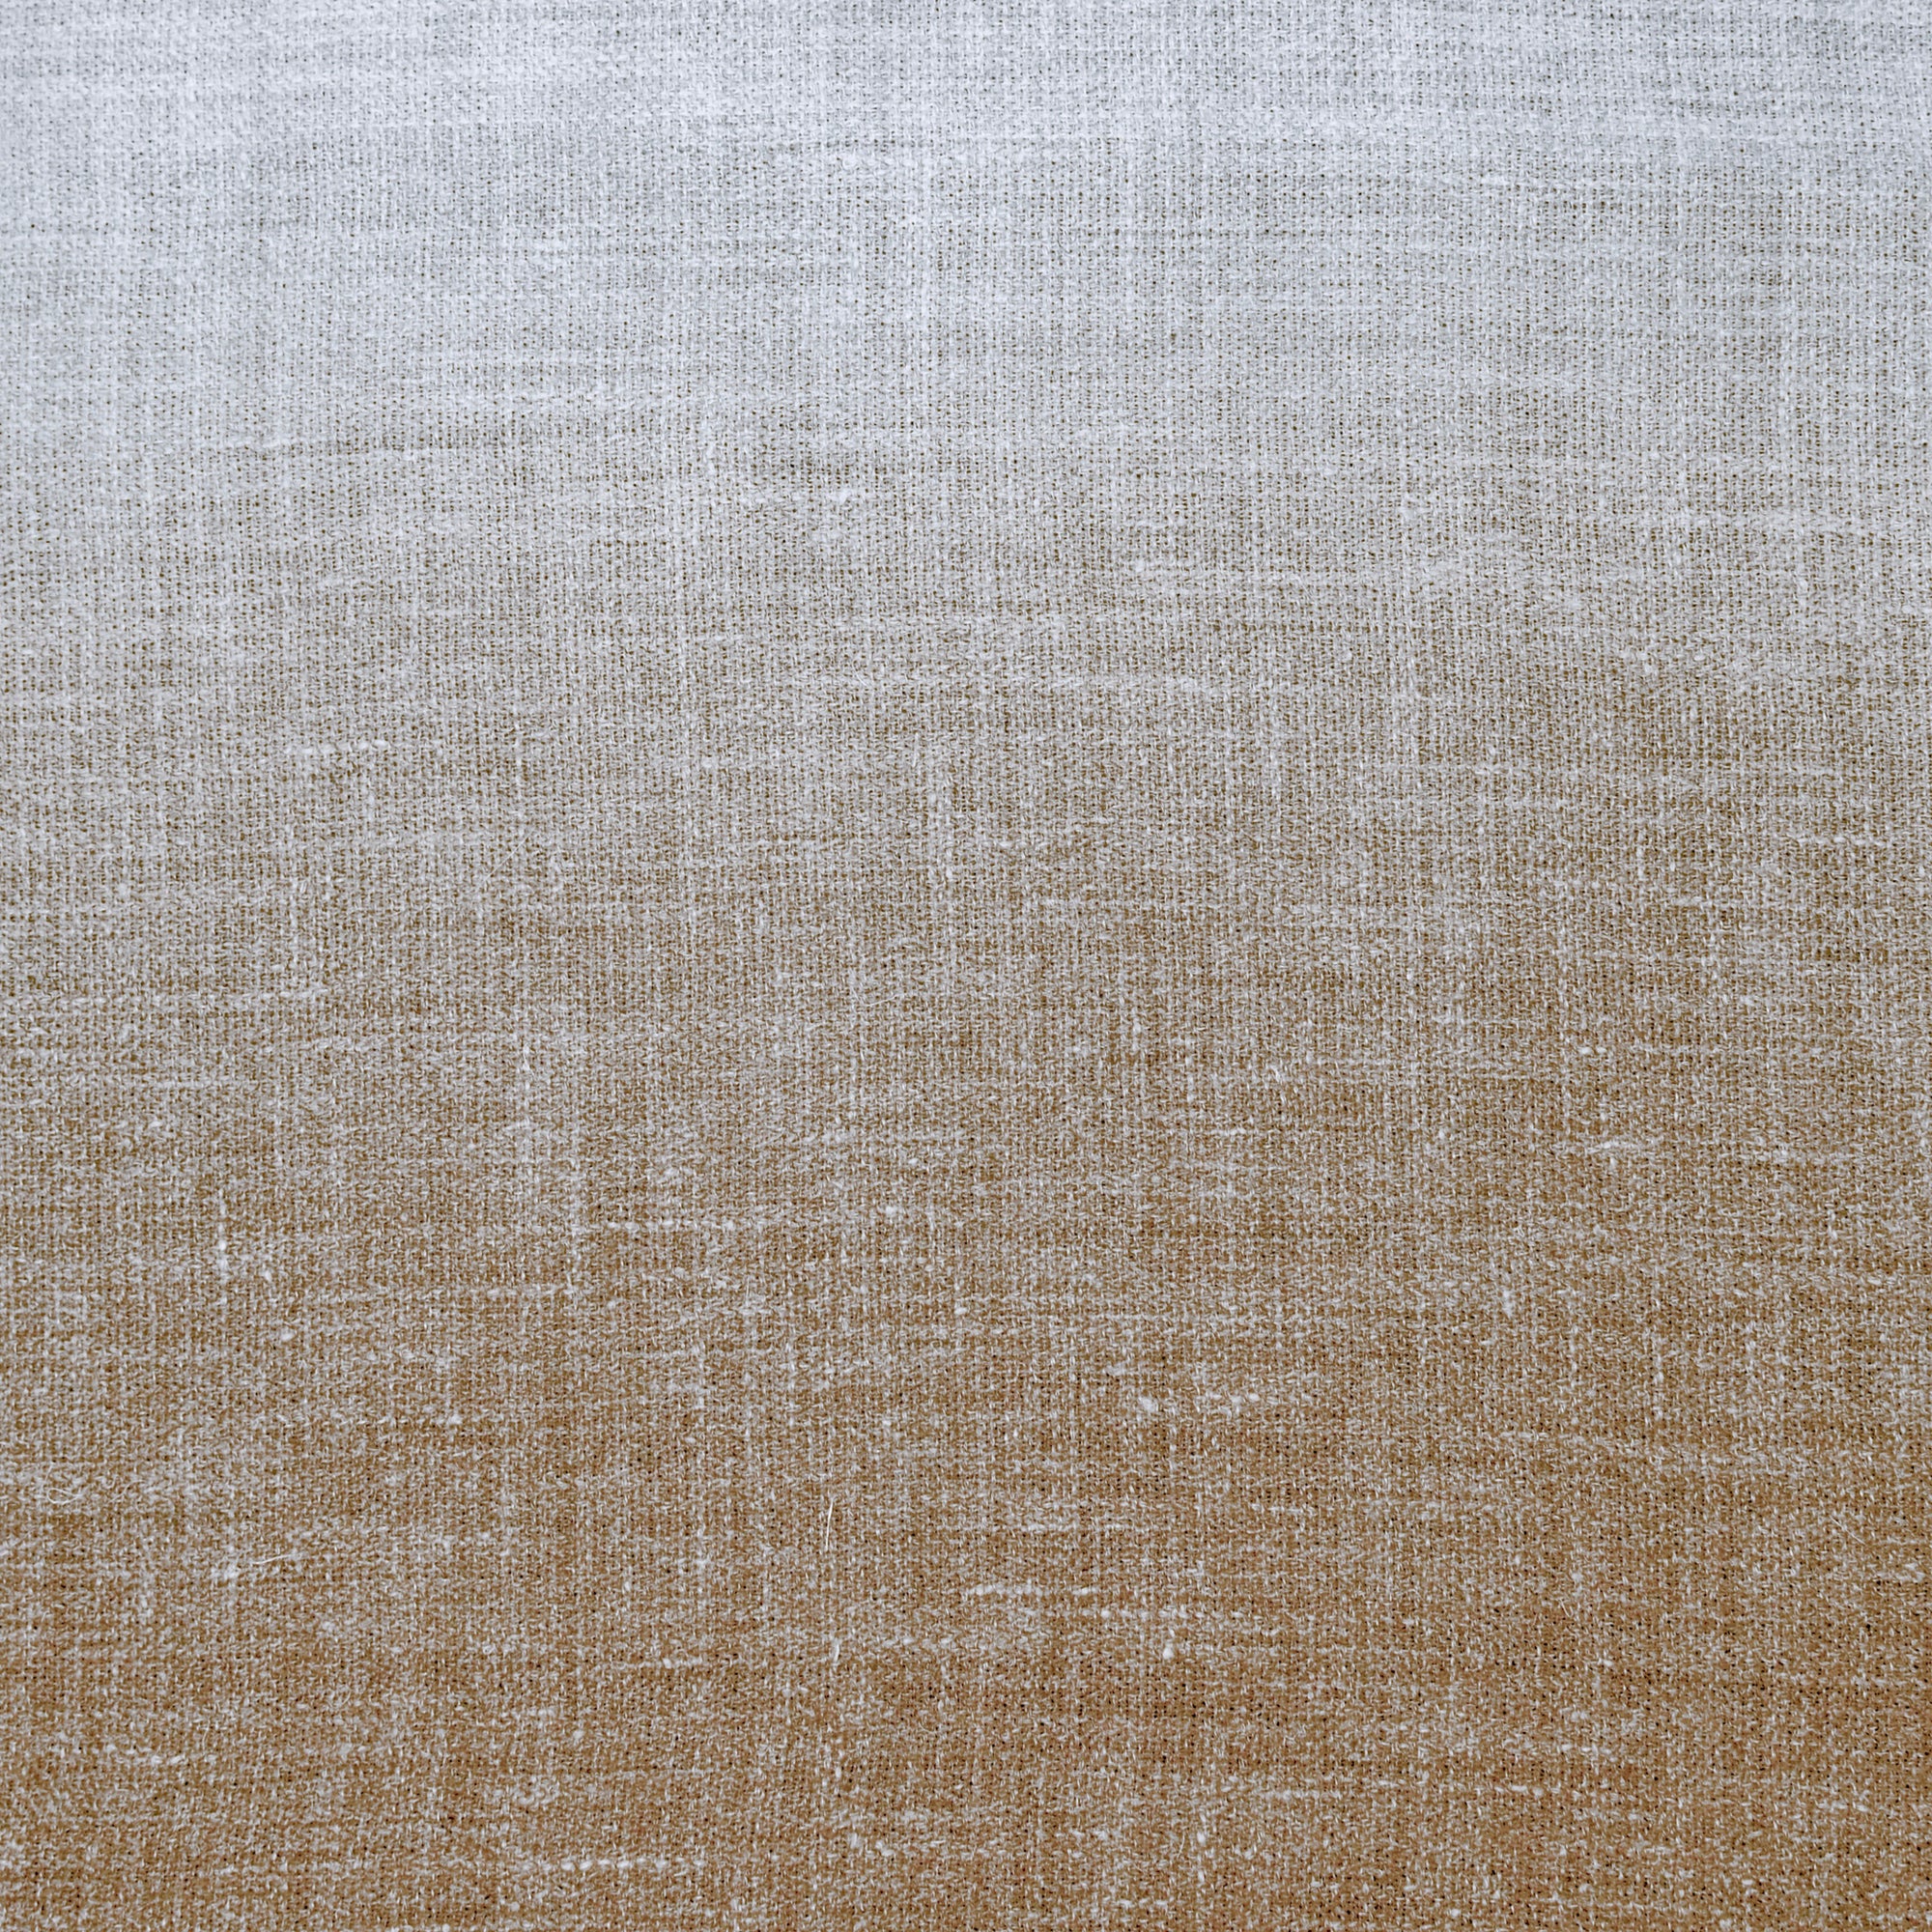 Ombre Alpaca Linen Fabric - Rosemary Hallgarten